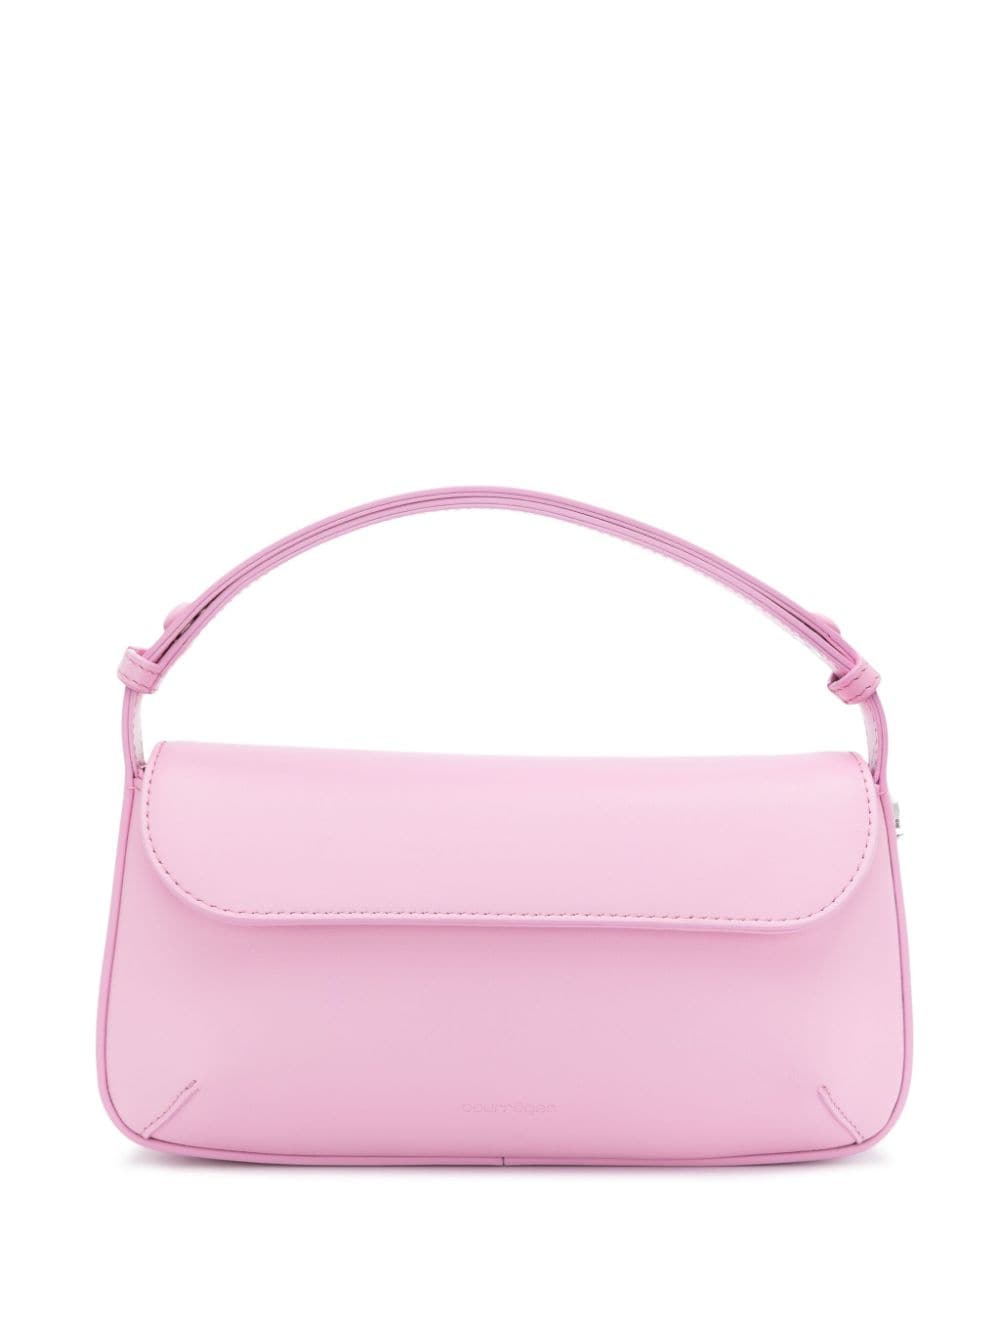 Courrèges Sleek leather shoulder bag - Pink von Courrèges